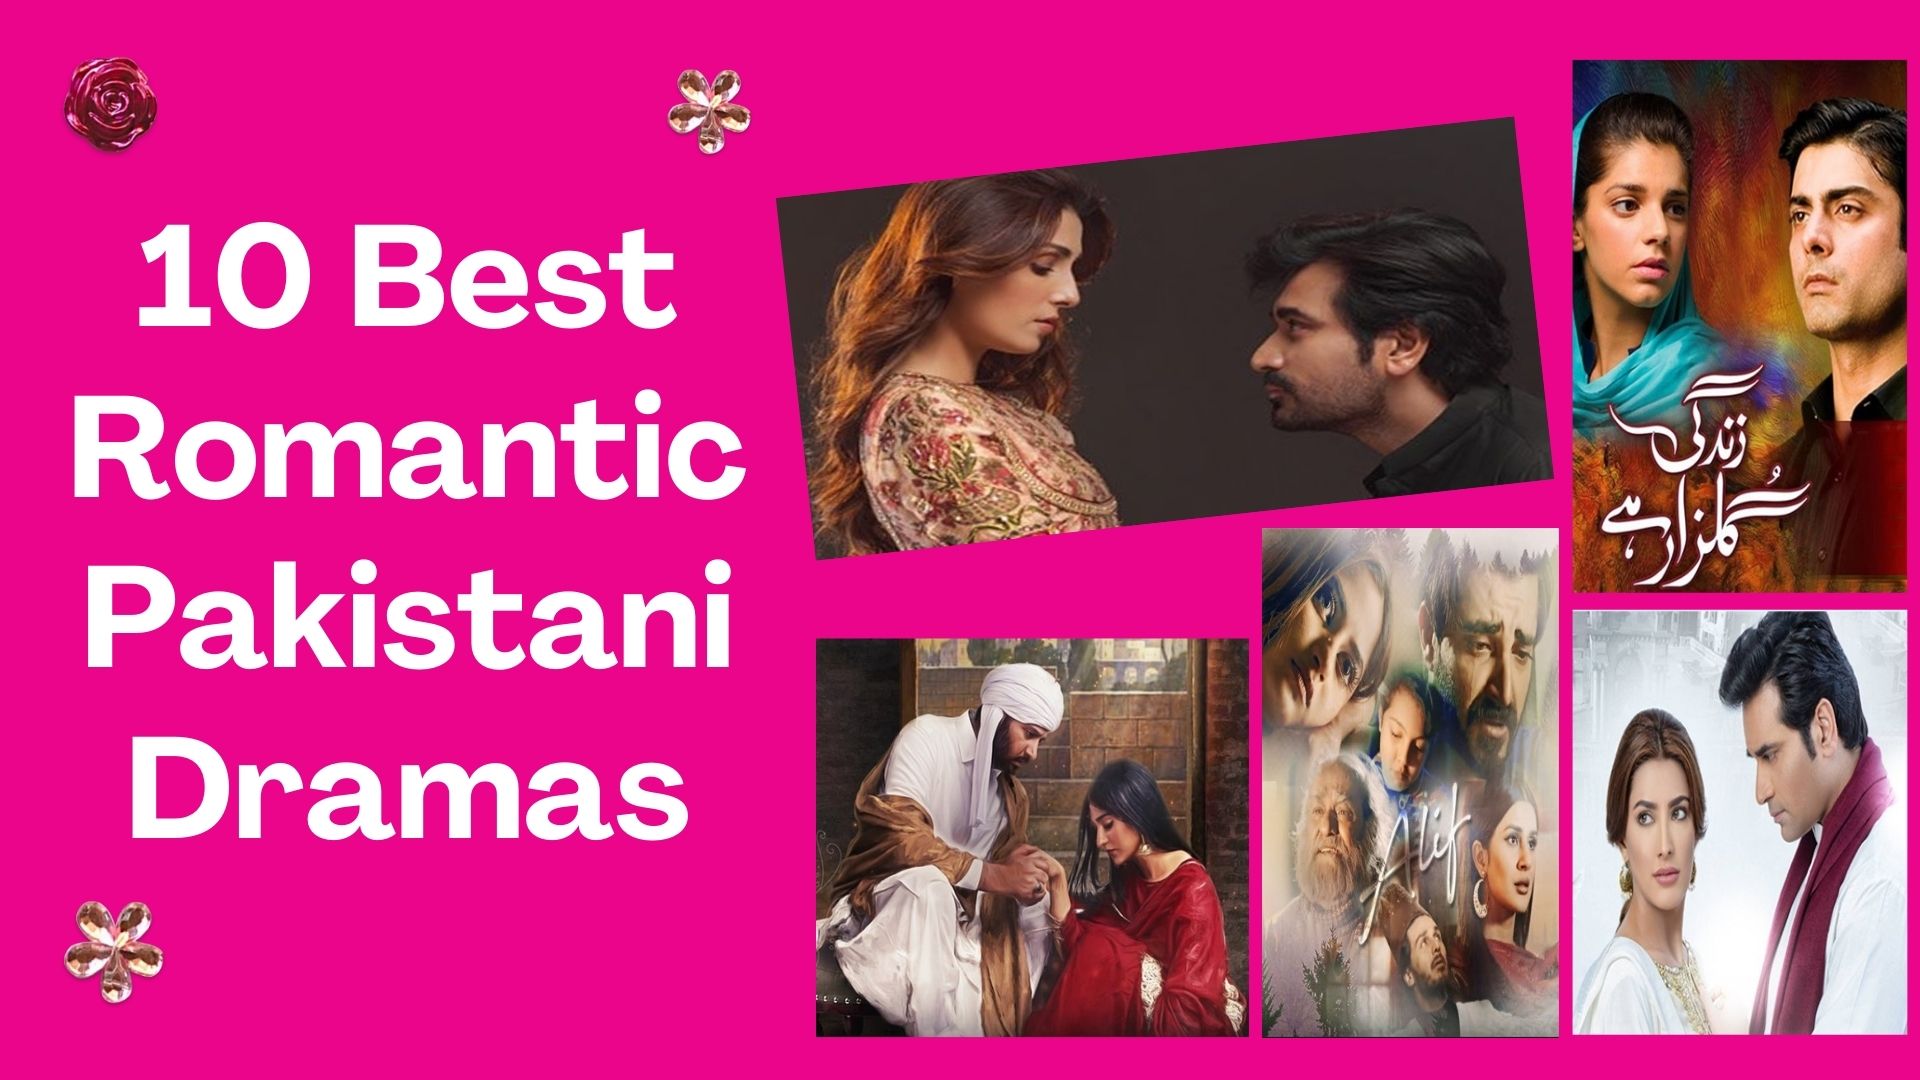 10 Best Romantic Pakistani Dramas